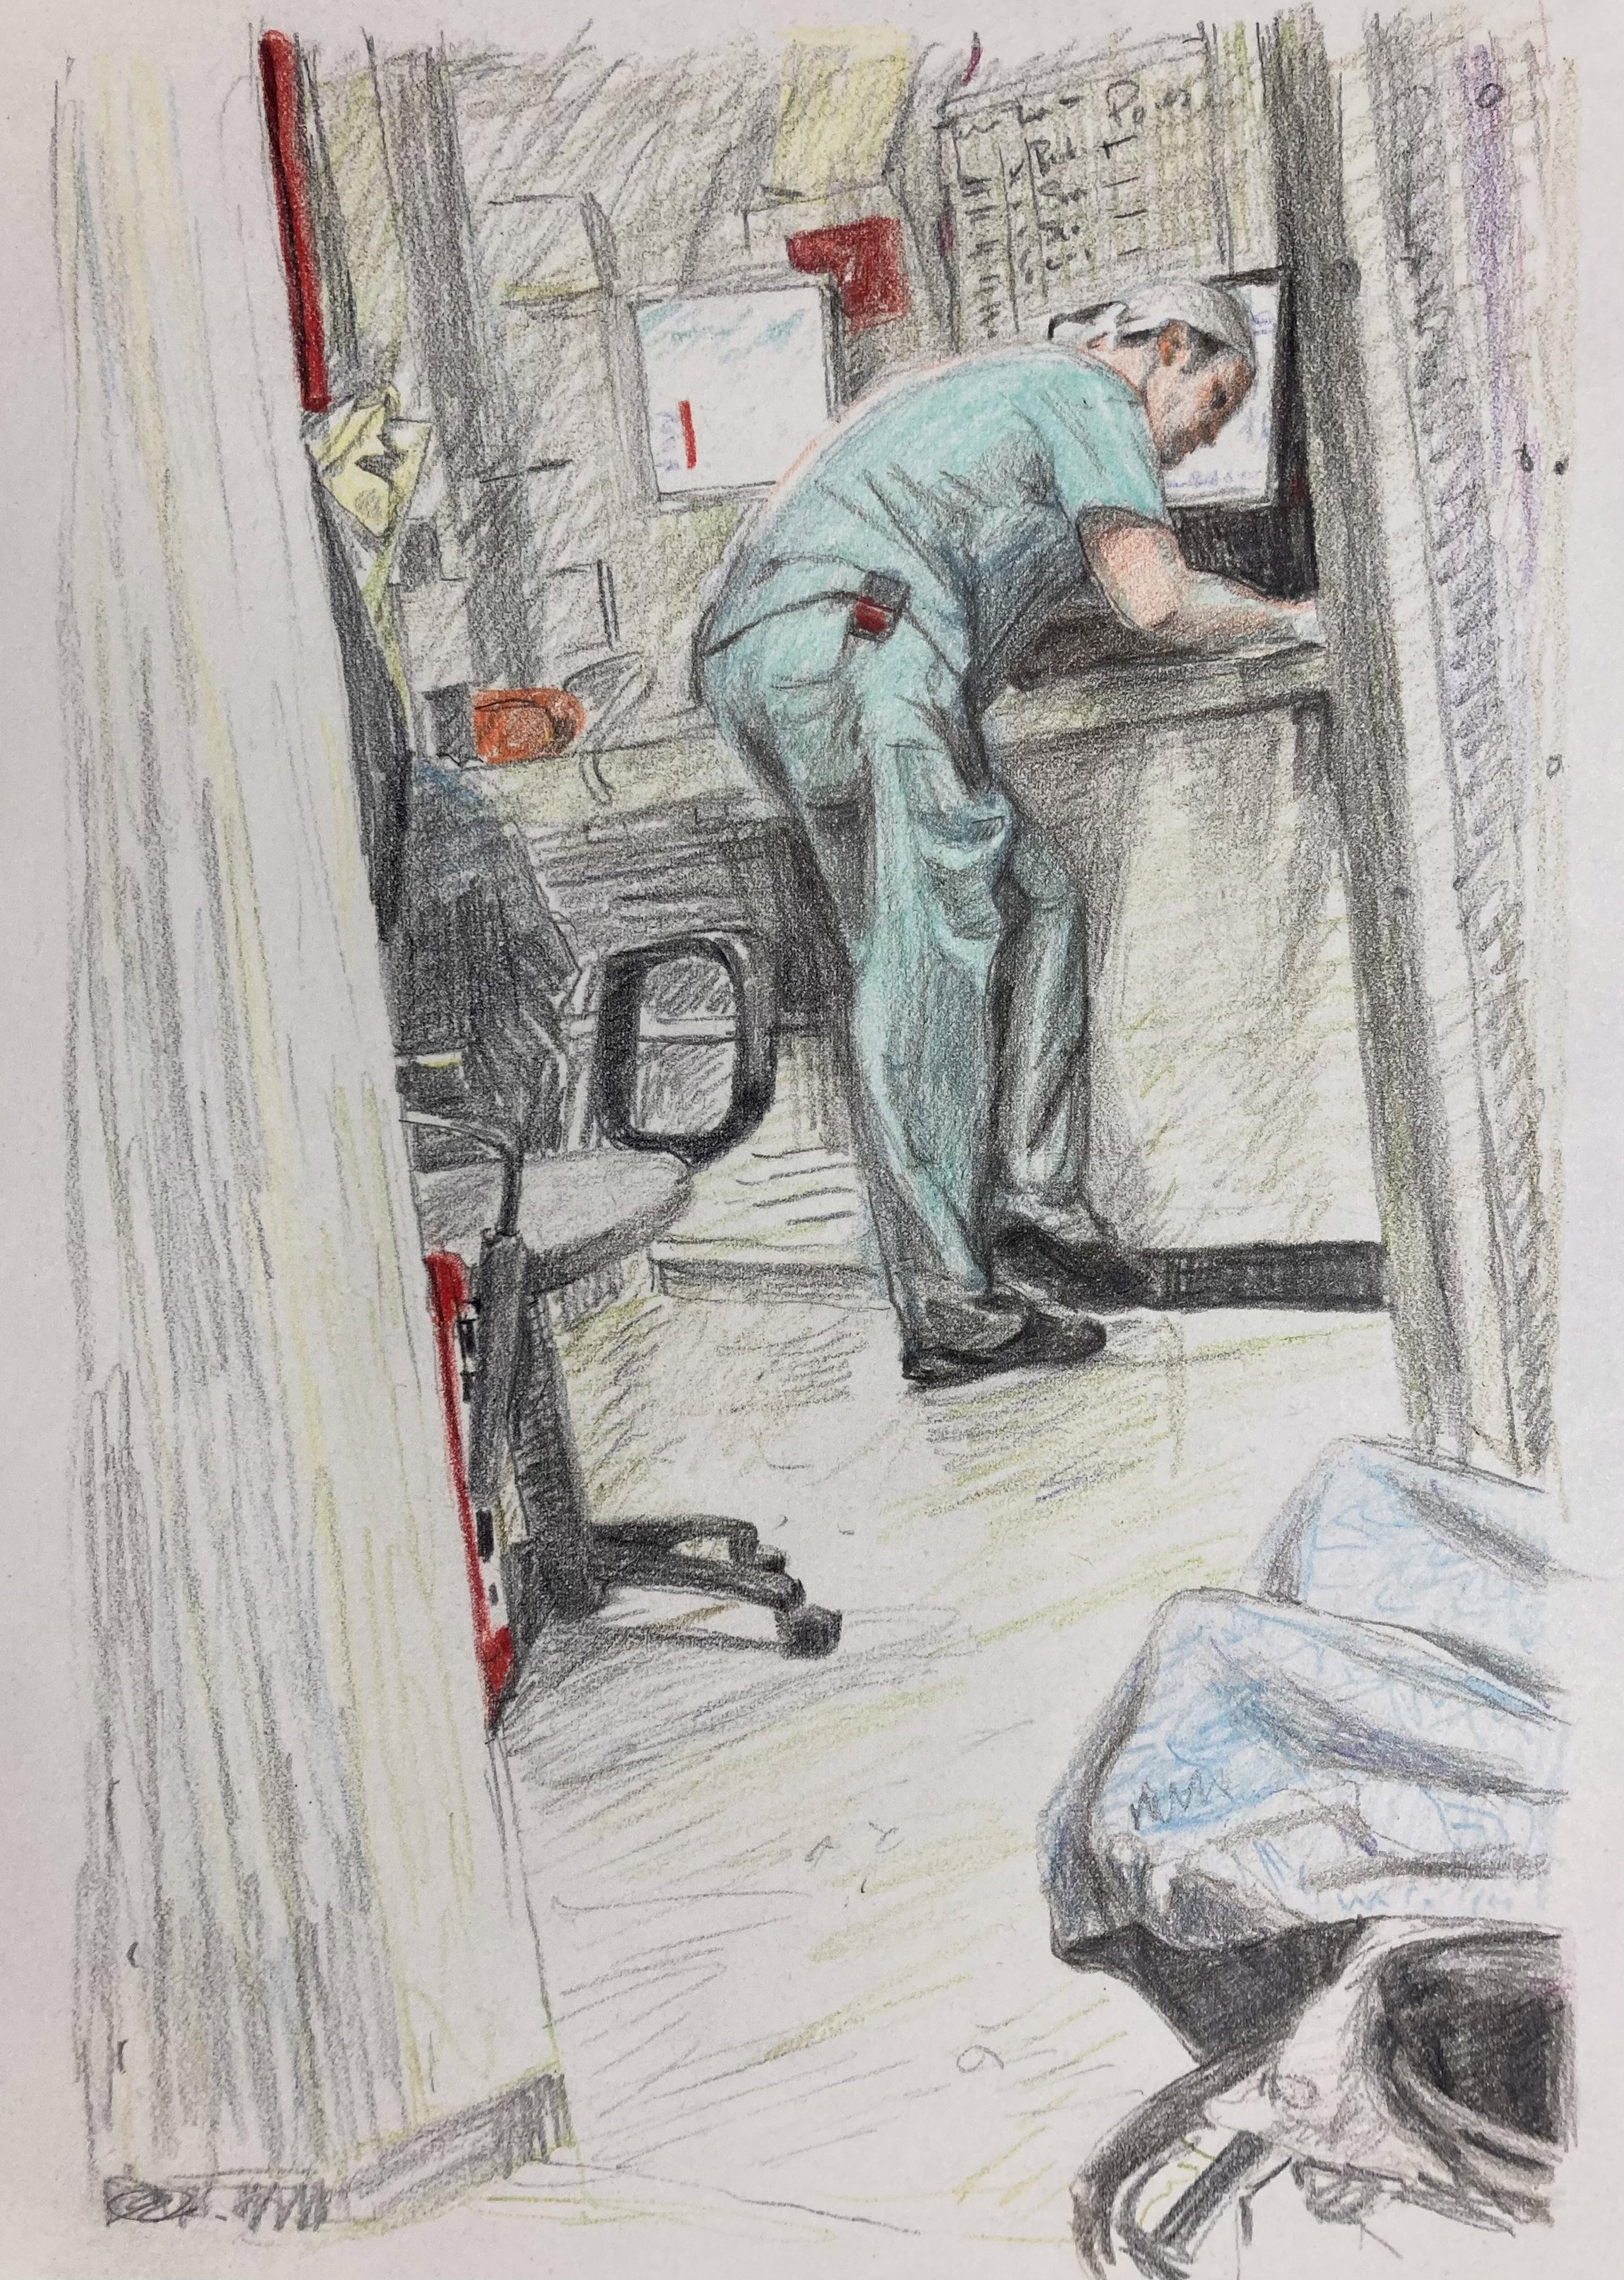 Hospital Worker #3 by Eilis Crean